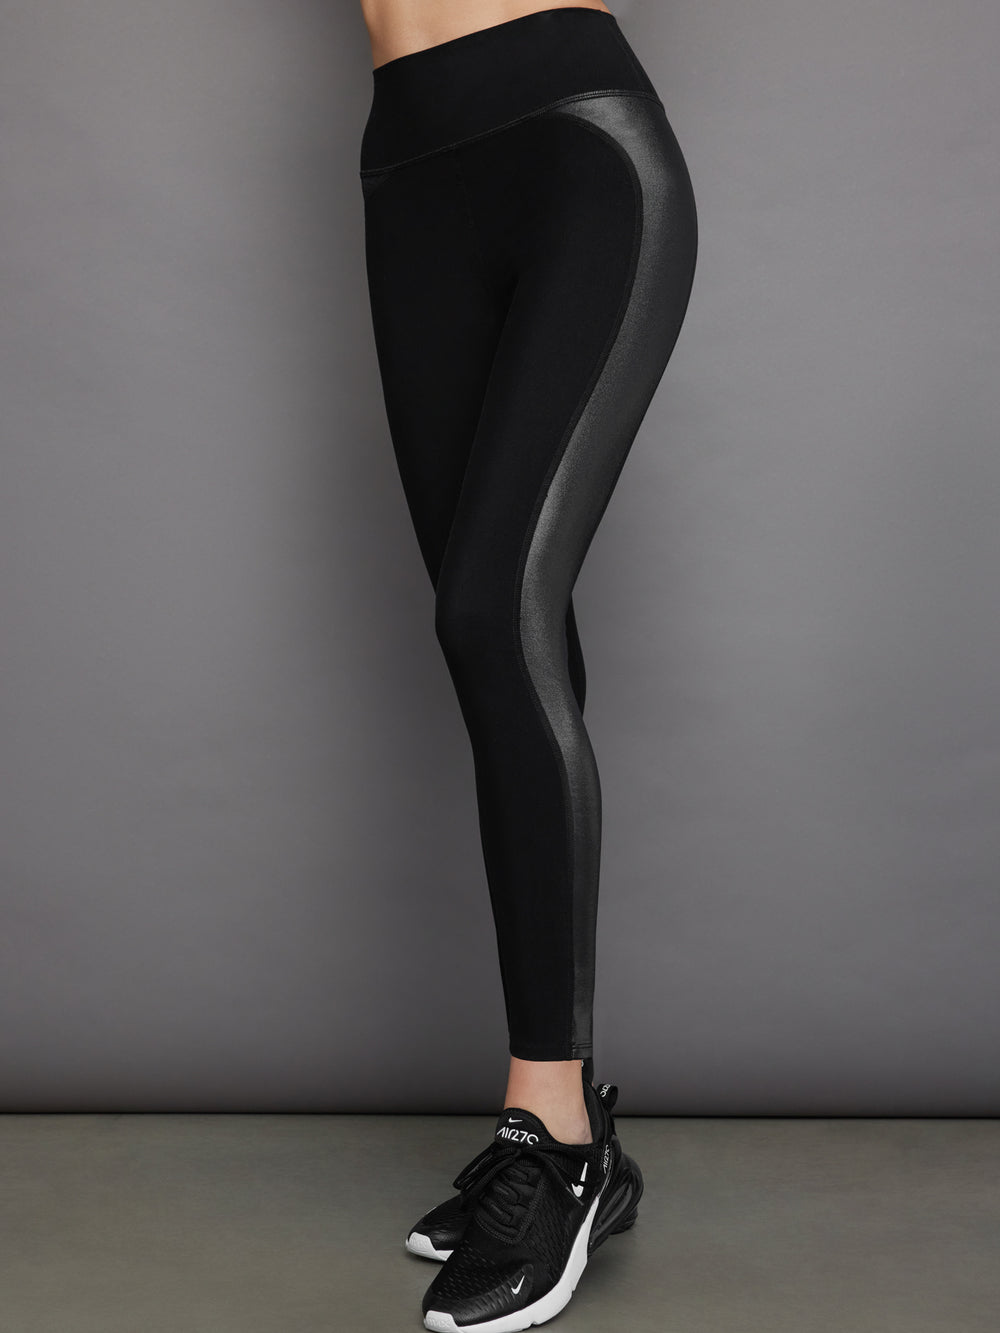 Unbranded Leggings Women's Size 6 Black Tuxedo Buttons Stretch Dressy Yoga  Dance